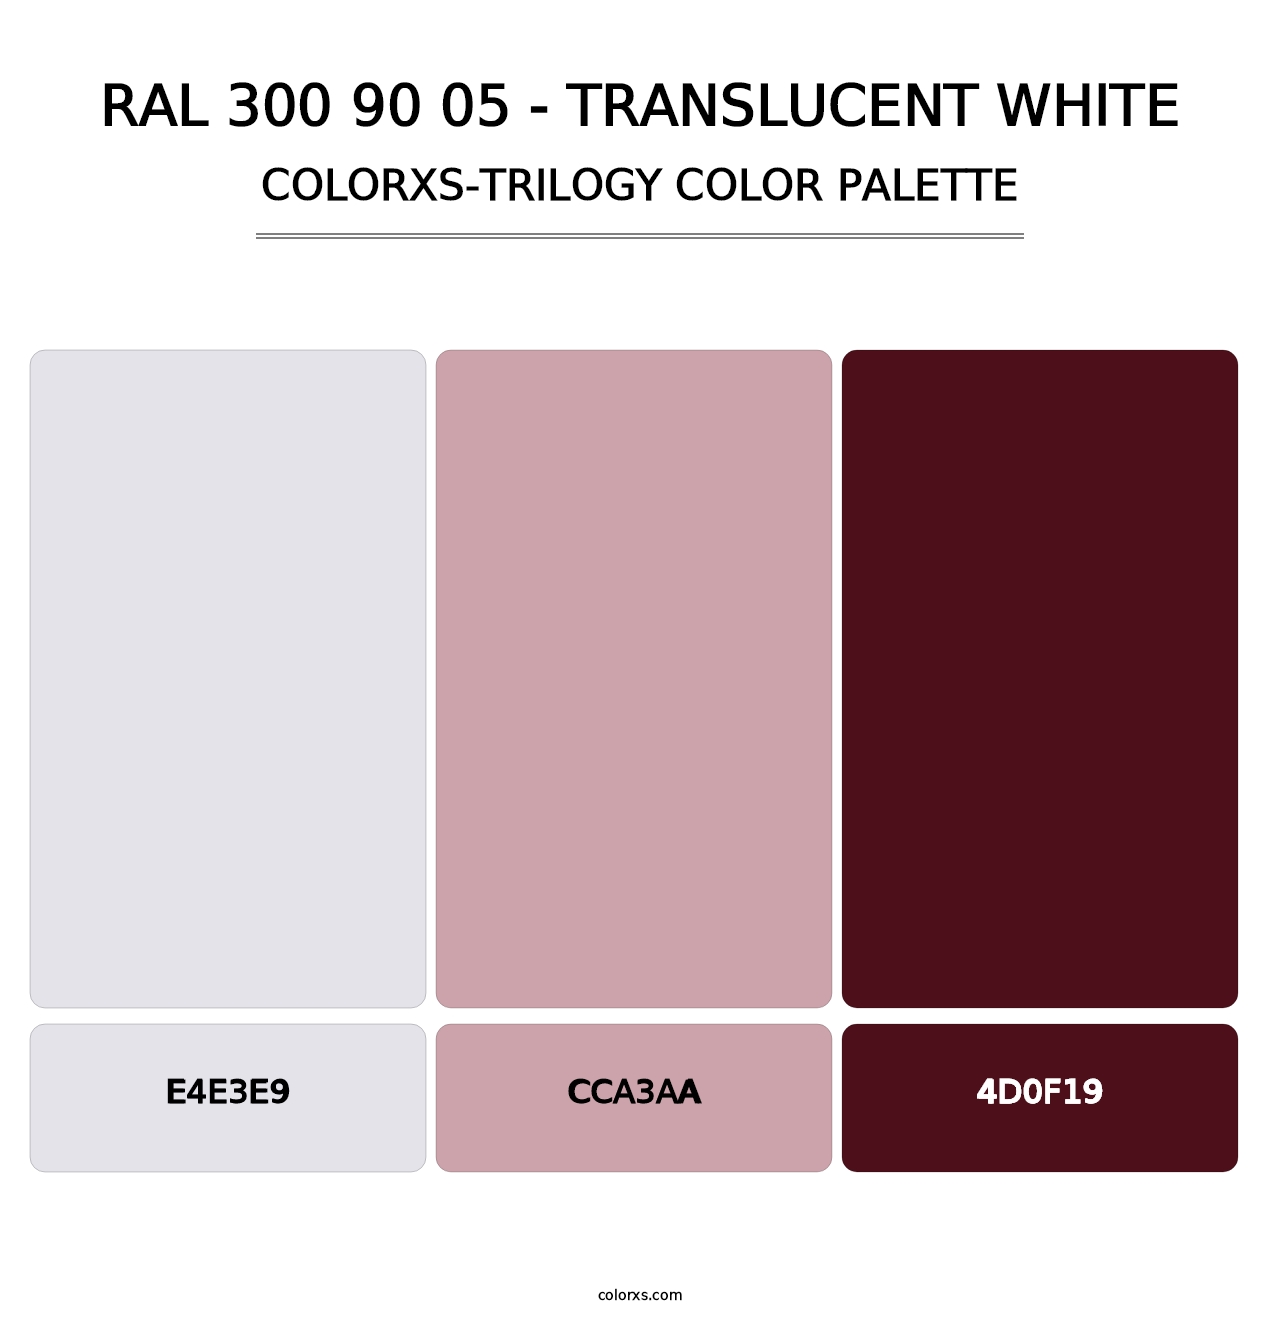 RAL 300 90 05 - Translucent White - Colorxs Trilogy Palette